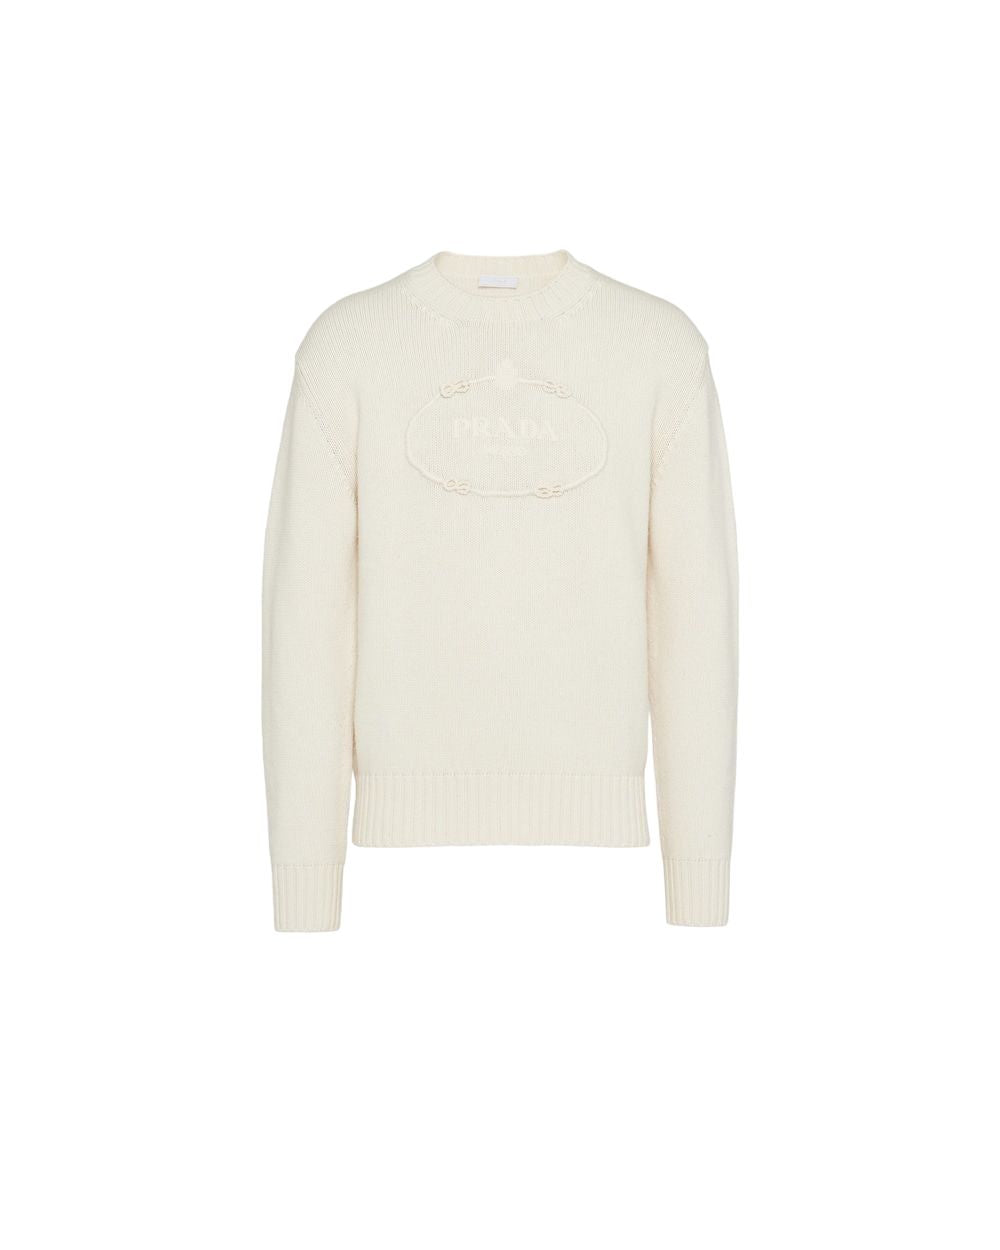 PRADA Luxurious White Cashmere Wool Sweater for Men